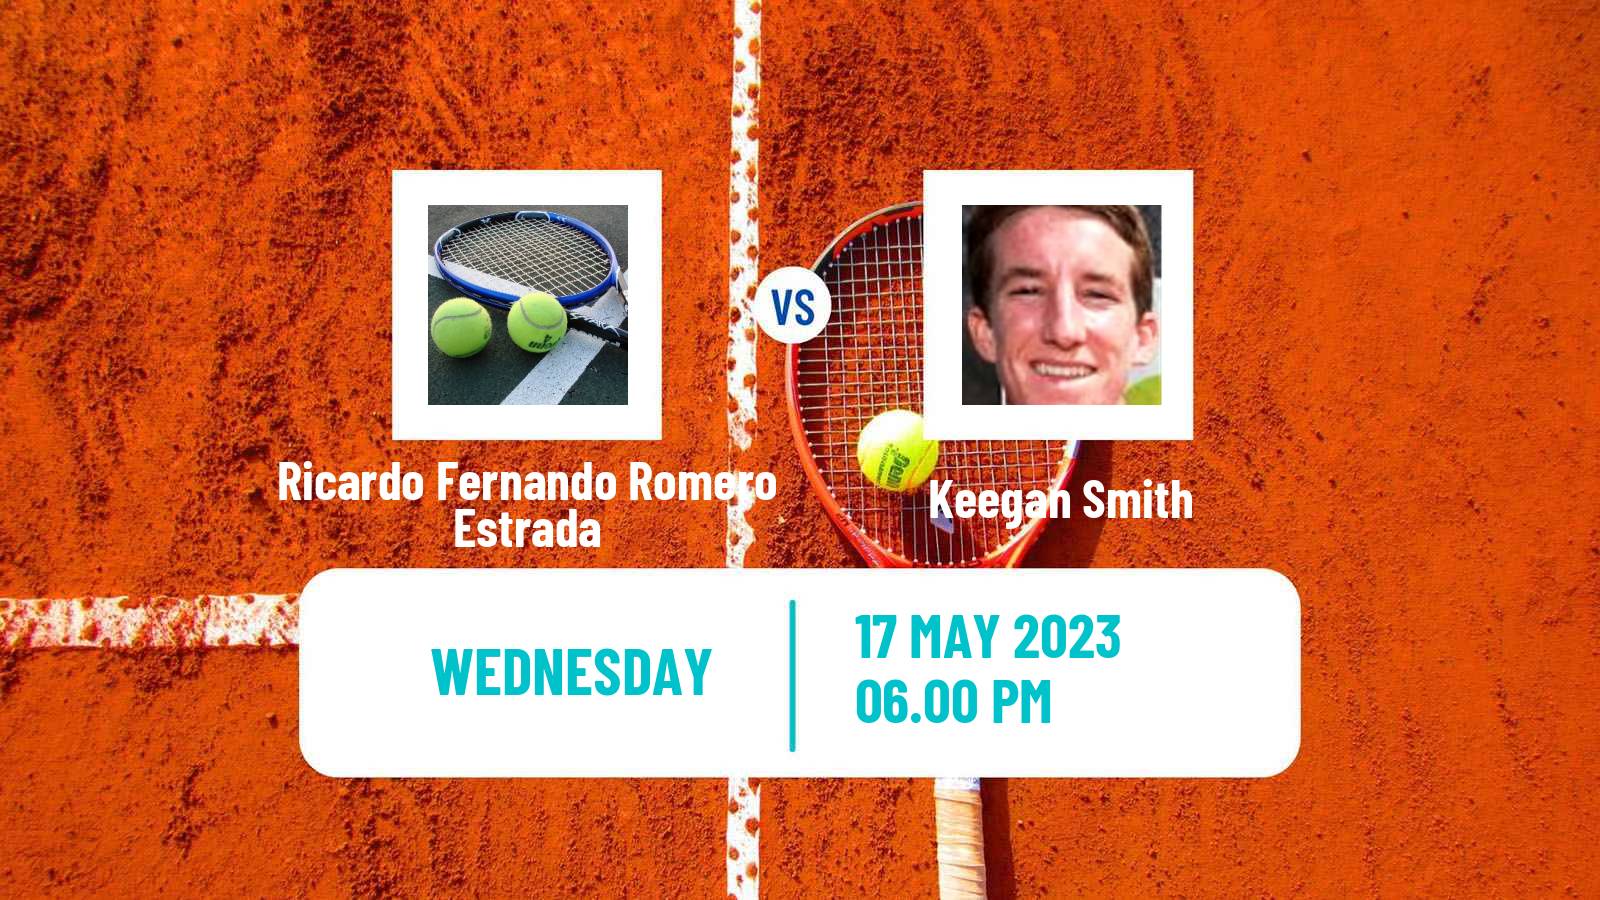 Tennis ITF M25 Xalapa Men Ricardo Fernando Romero Estrada - Keegan Smith